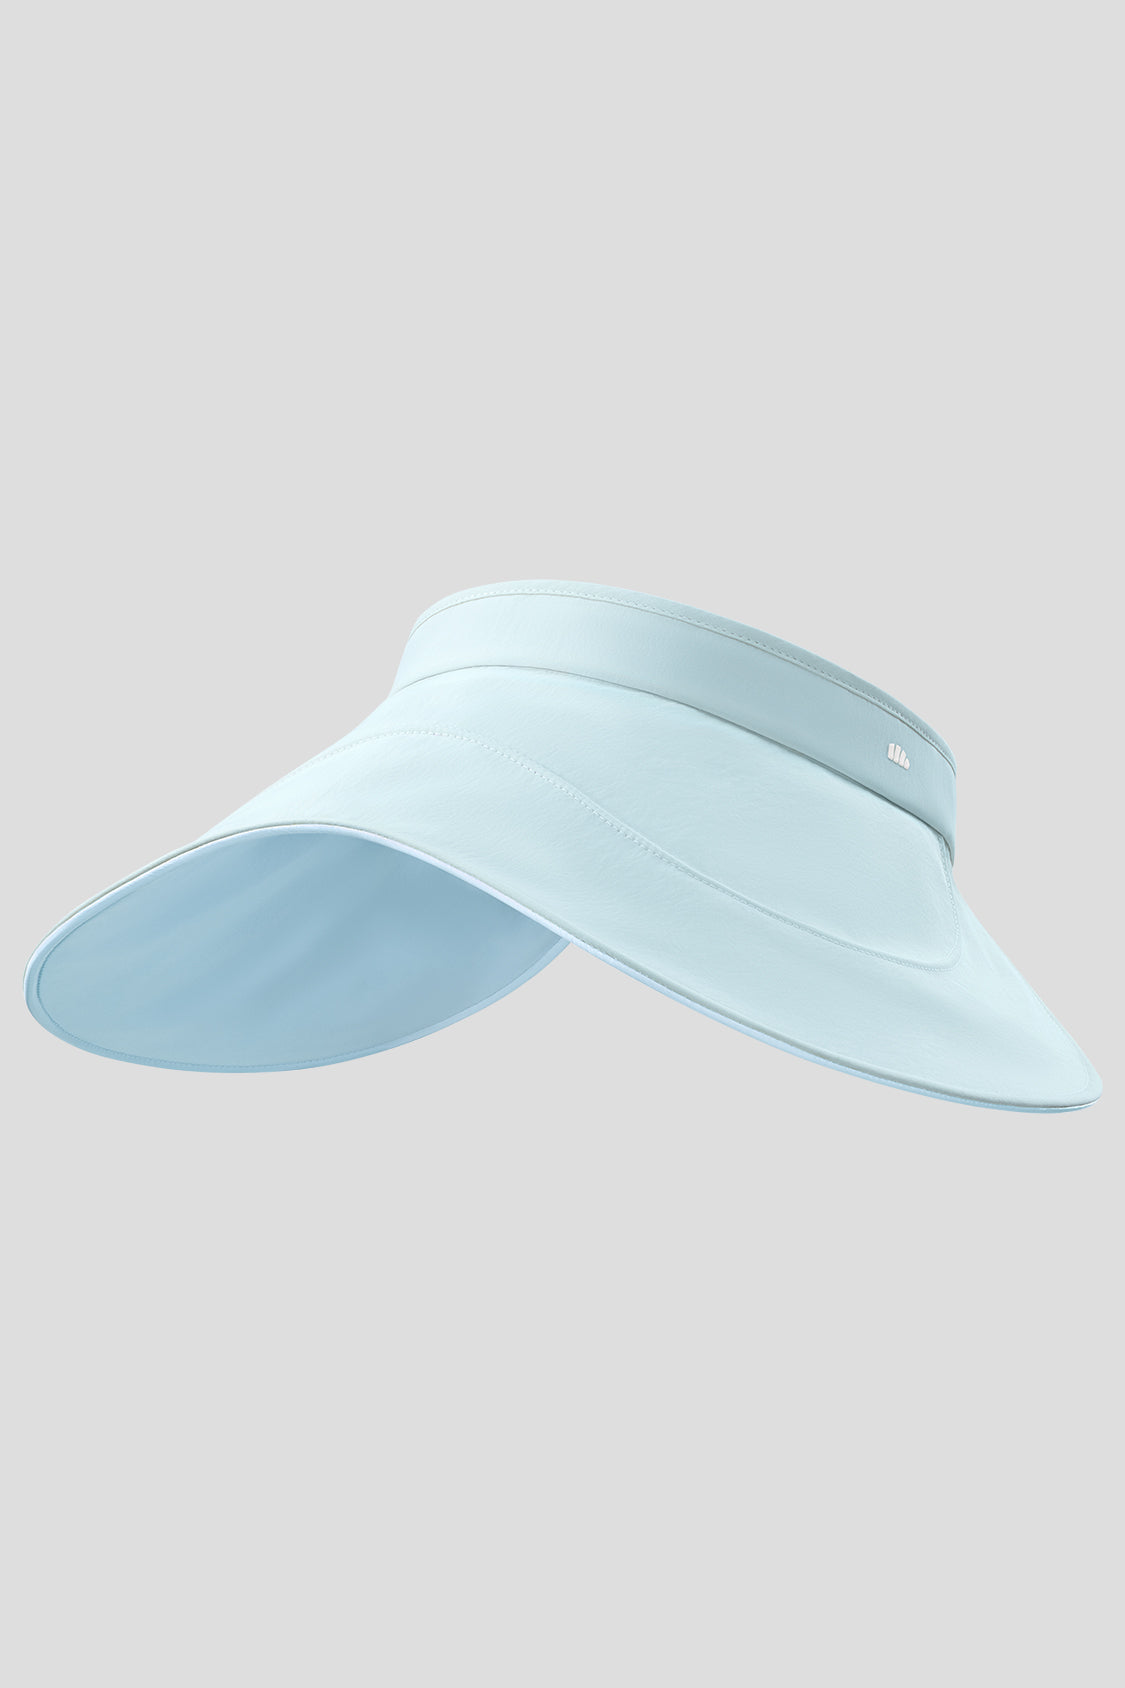 Sun Hat for Women, Beneunder UPF50+ Packable Wide Brim UV Protection Sun Visor Hat Creamy Lilac / One Size - Adjustable